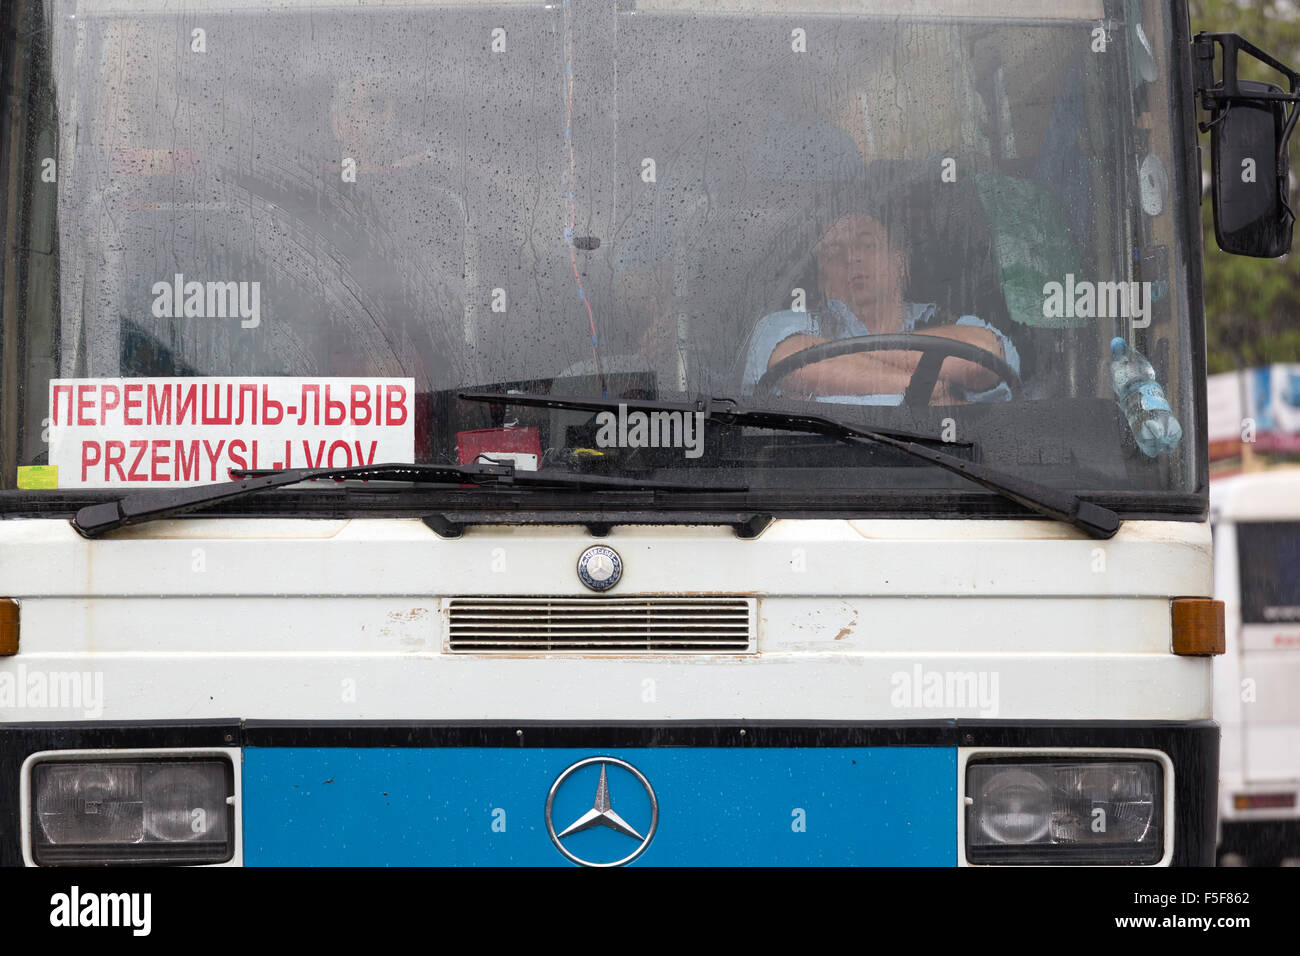 Przemysl, Poland, Ukrainian driver taking a nap Stock Photo